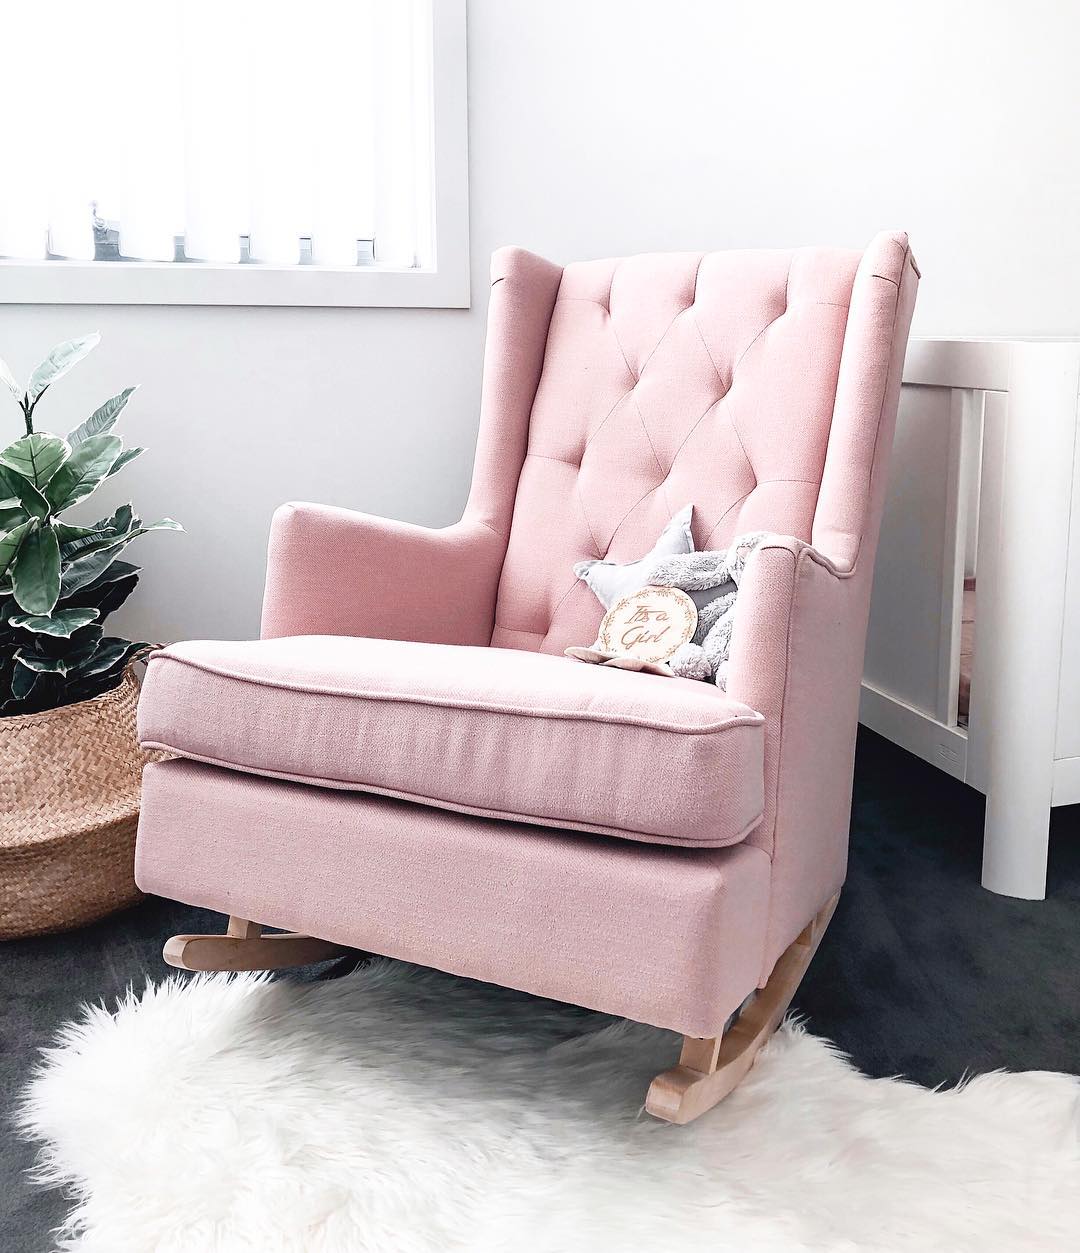 Pink rocking chair in nursery corner. Photo by Instagram user @mamaplusthree_